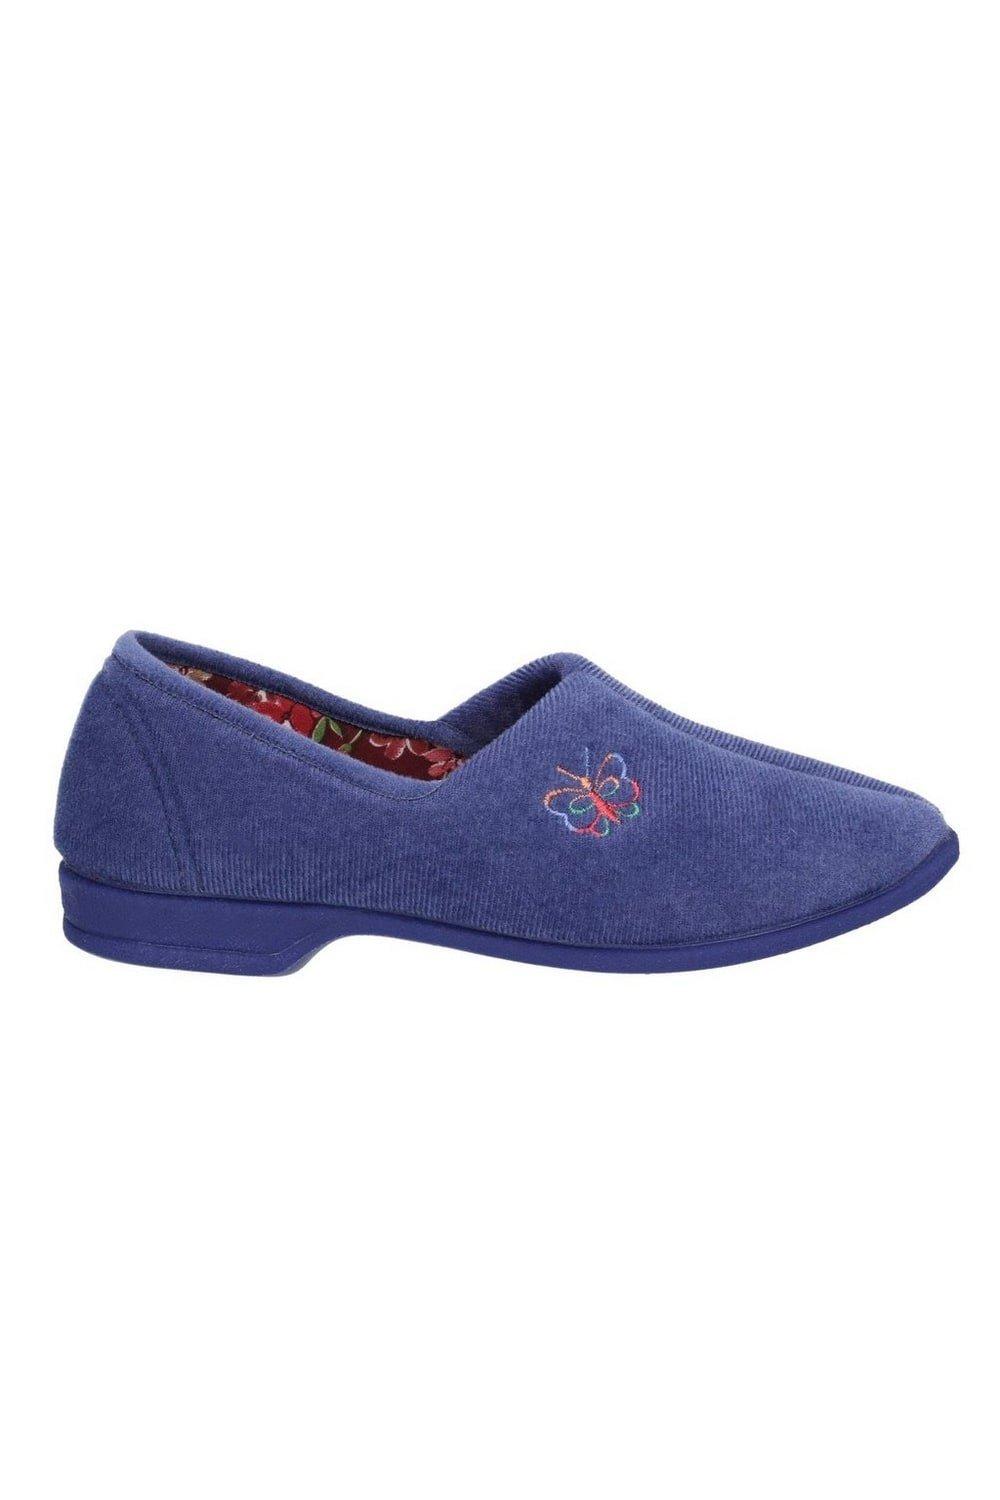  Mirak Bouquet / Ladies Slipper / Classic Womens Slippers (8 UK) (Blueberry)